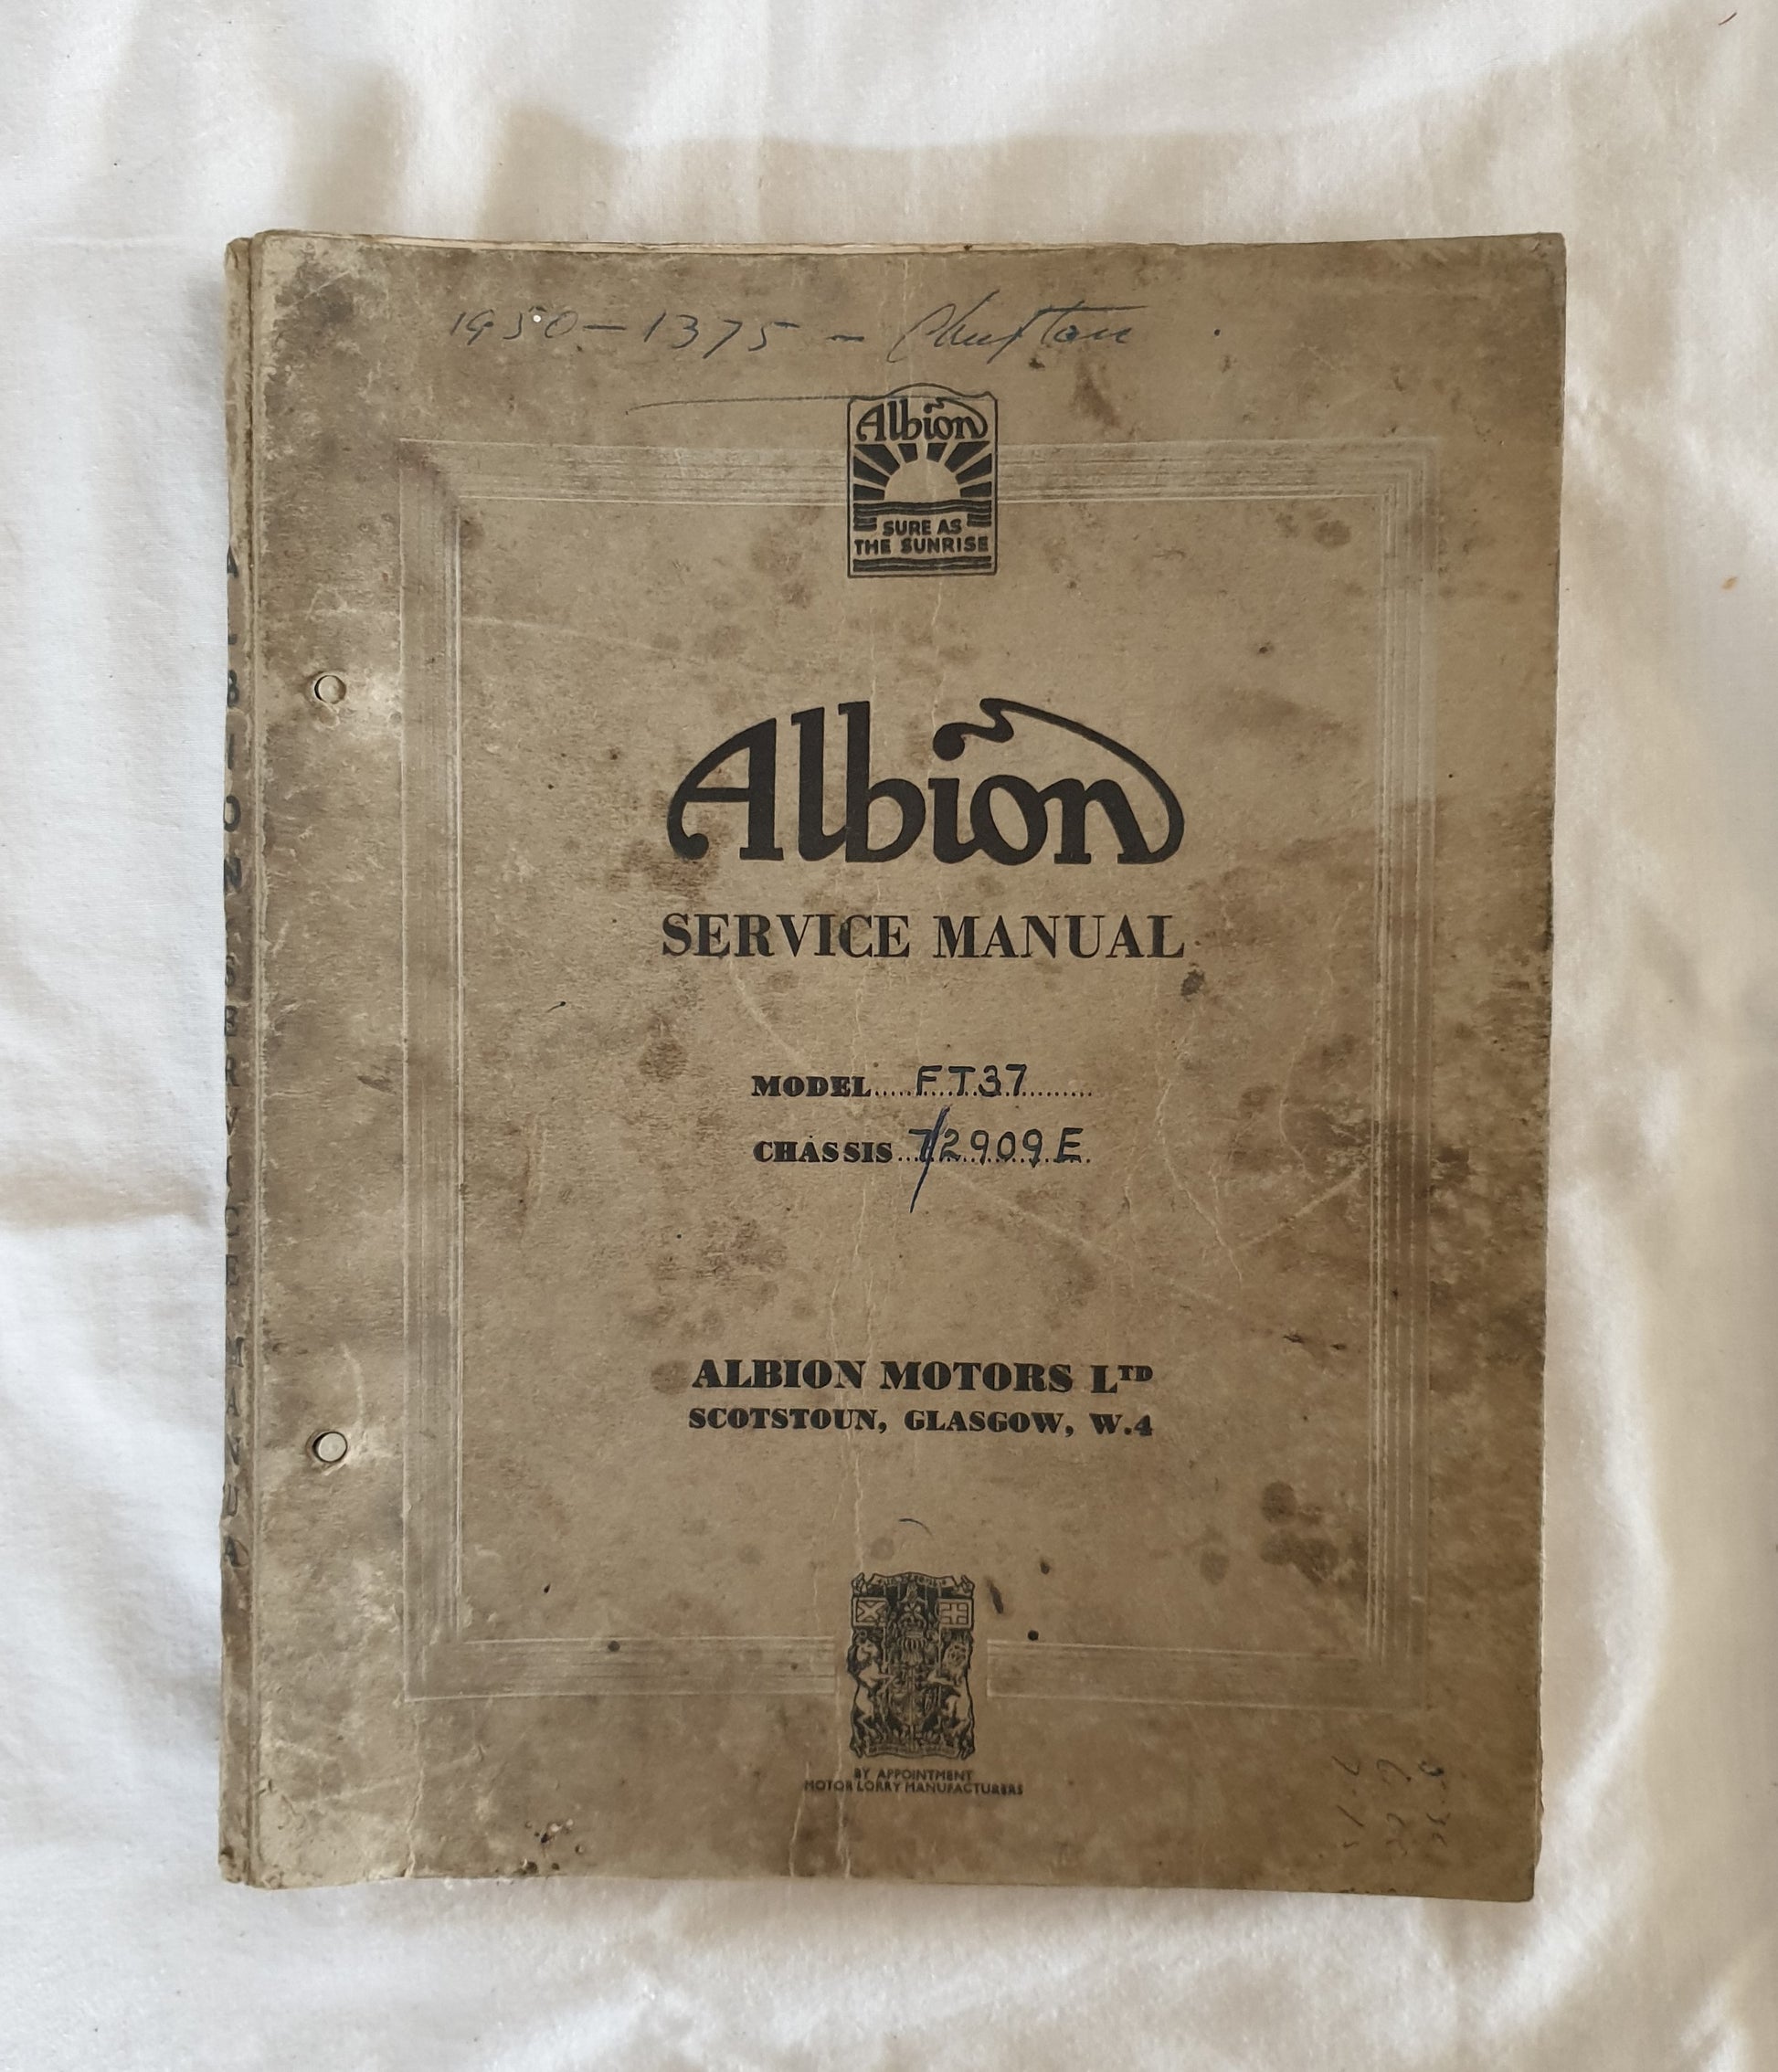 Albion Service Manual Model FT37